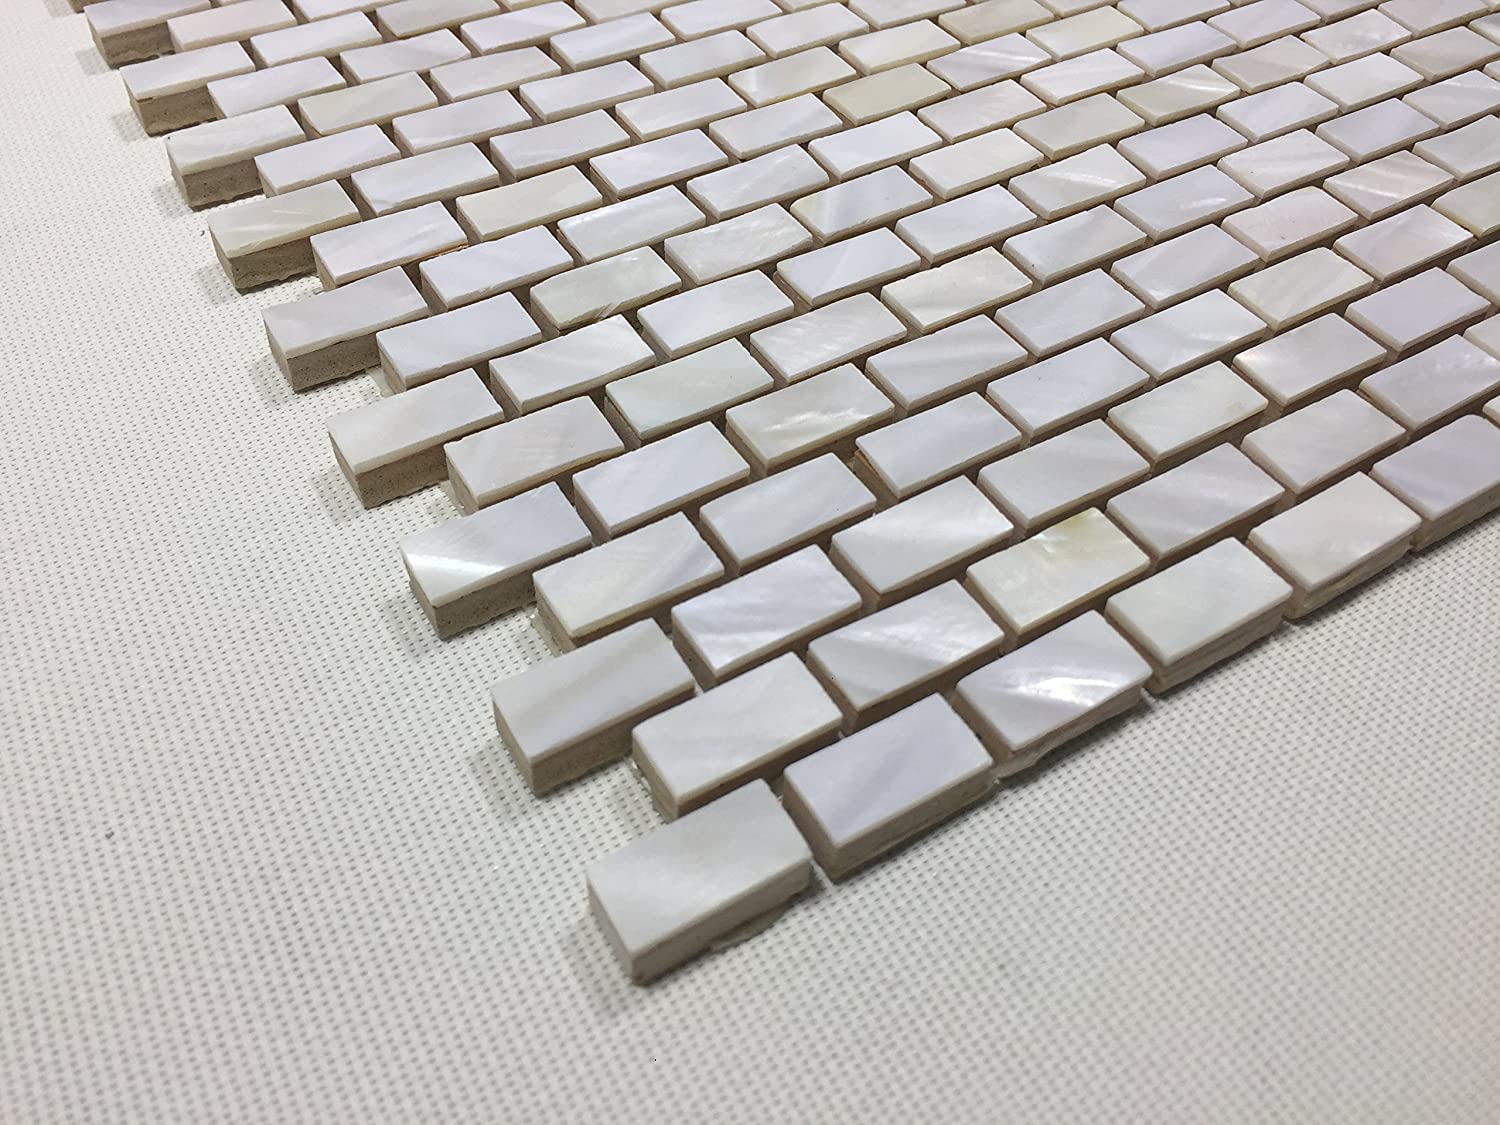 Mother of Pearl Seashell Oyster Mini Brick w/backing Mosaic Floor Wall Tile for Kitchen Backsplash, Bathroom Shower, Fireplace